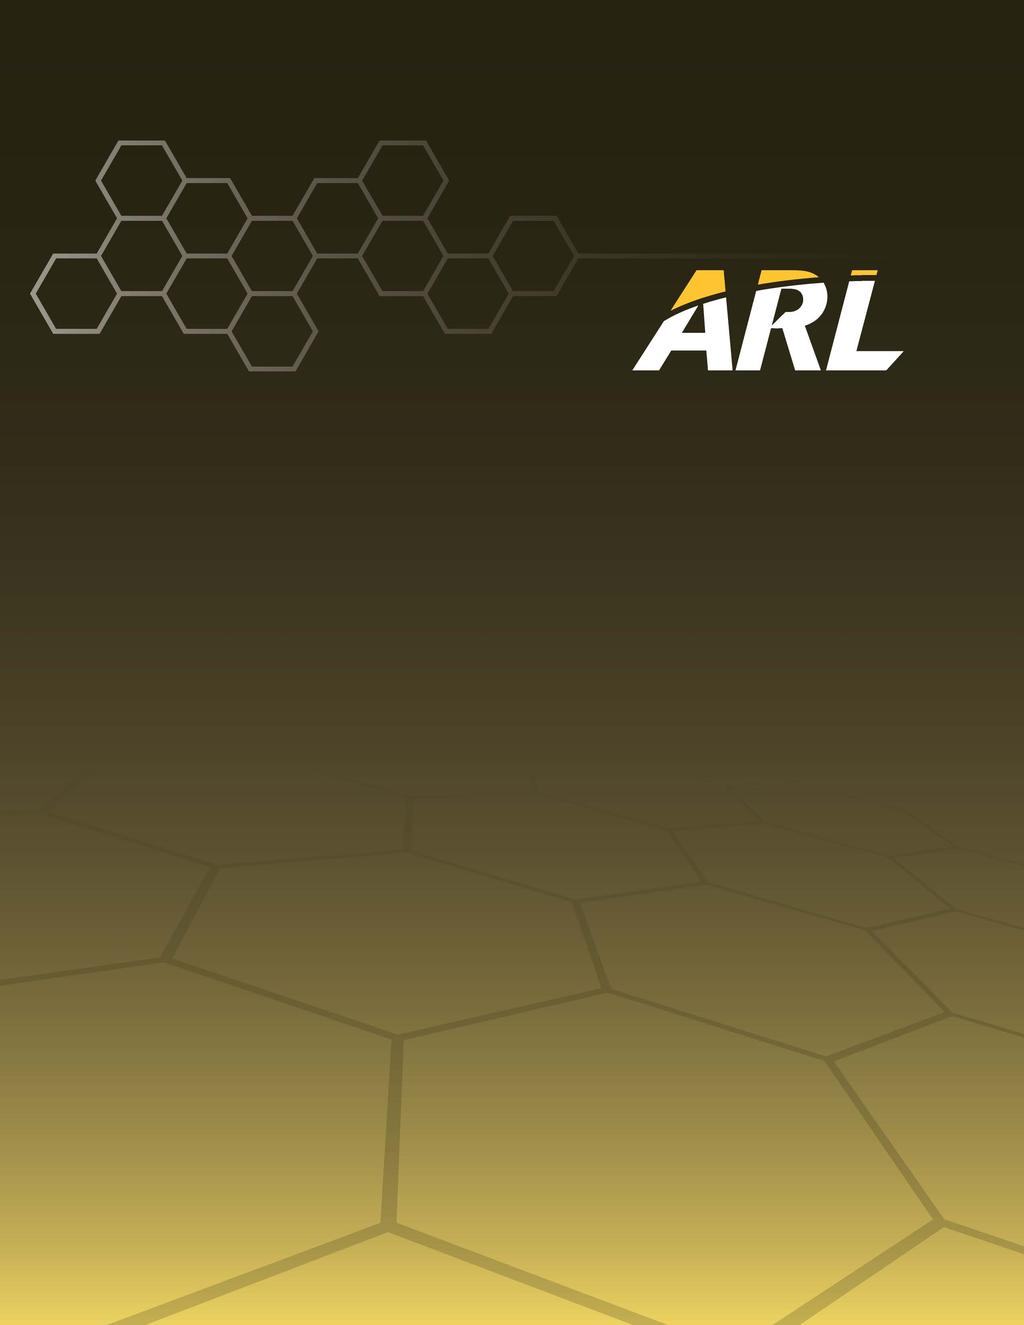 ARL-TN-0775 SEP 2016 US Army Research Laboratory